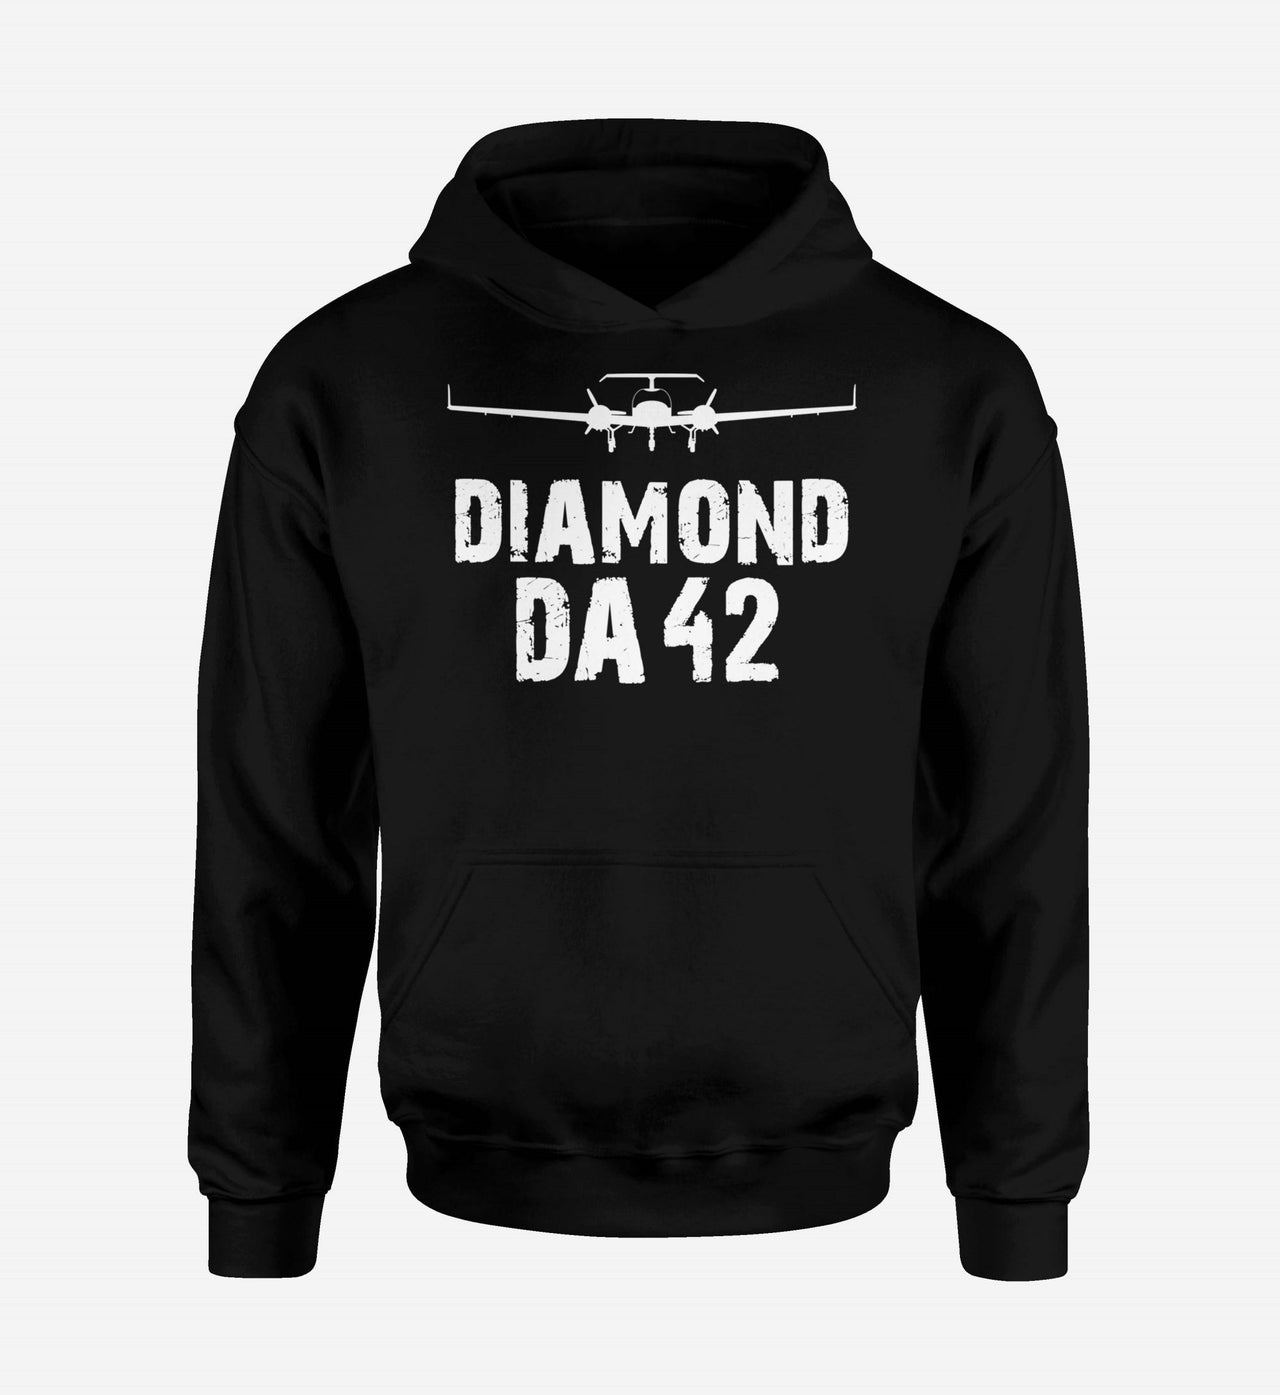 Diamond DA42 & Plane Designed Hoodies